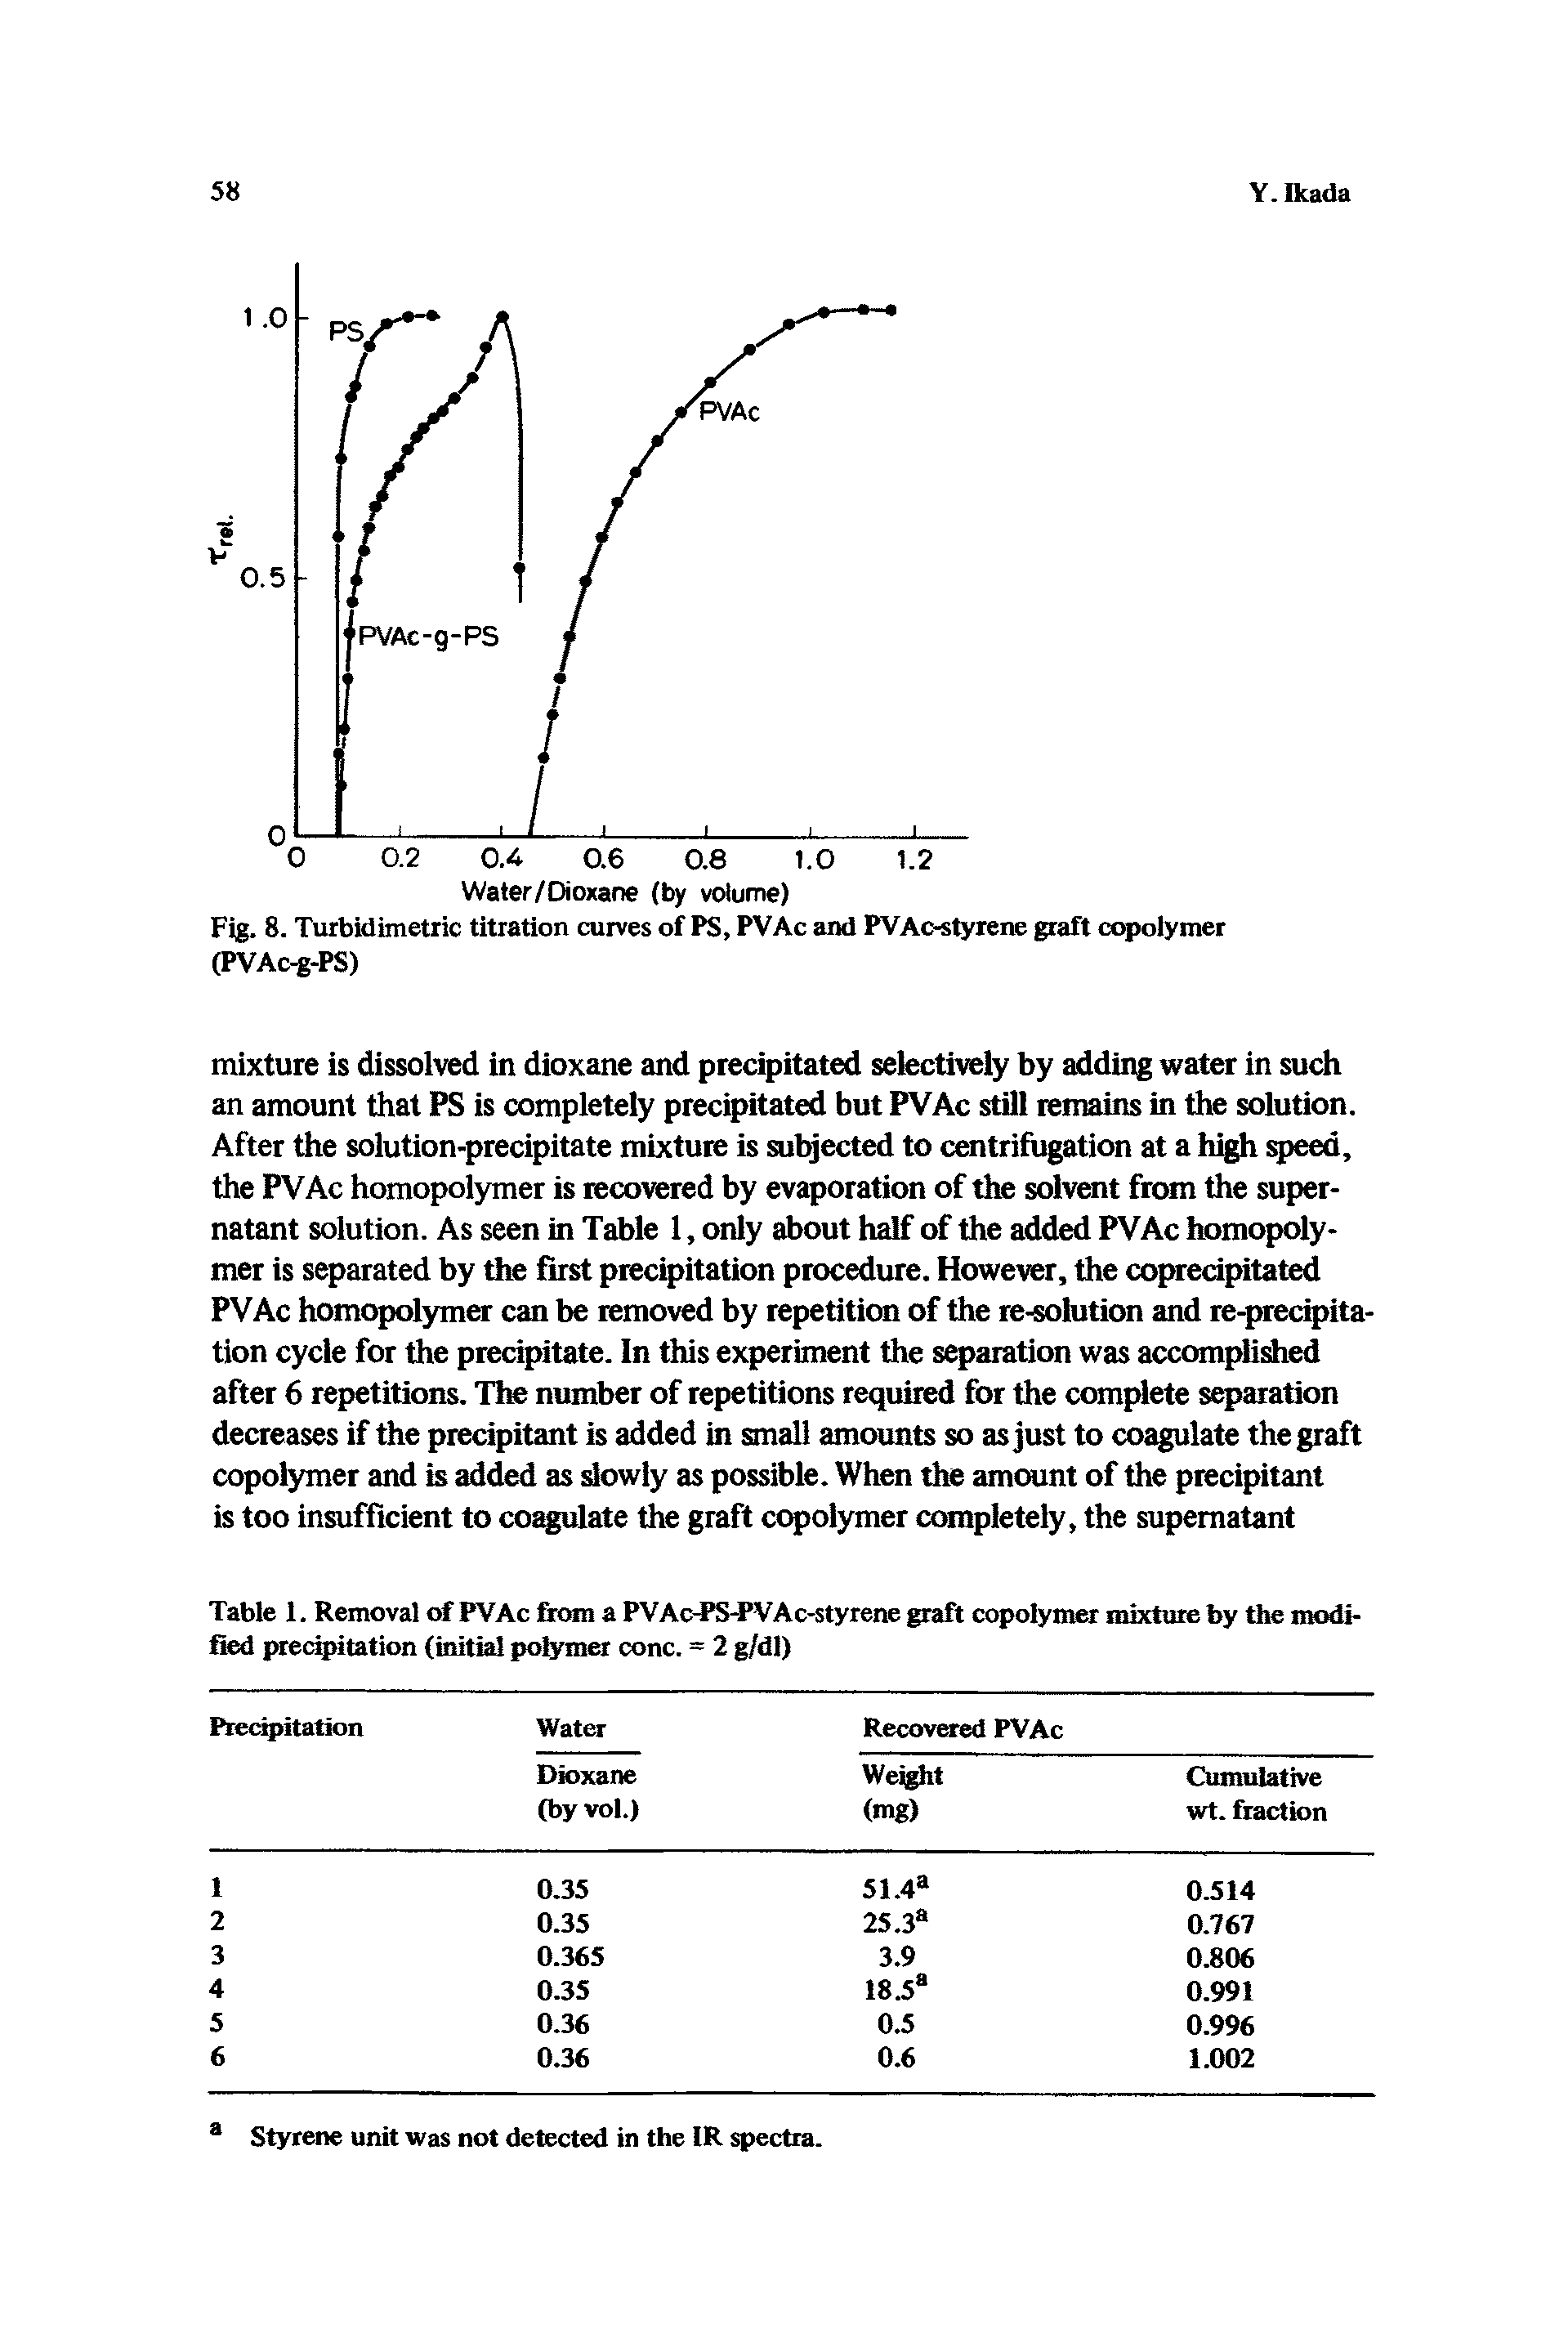 Fig. 8. Turbidimetric titration curves of PS, PVAc and PVAc-styrene graft copolymer (PVAc-g-PS)...